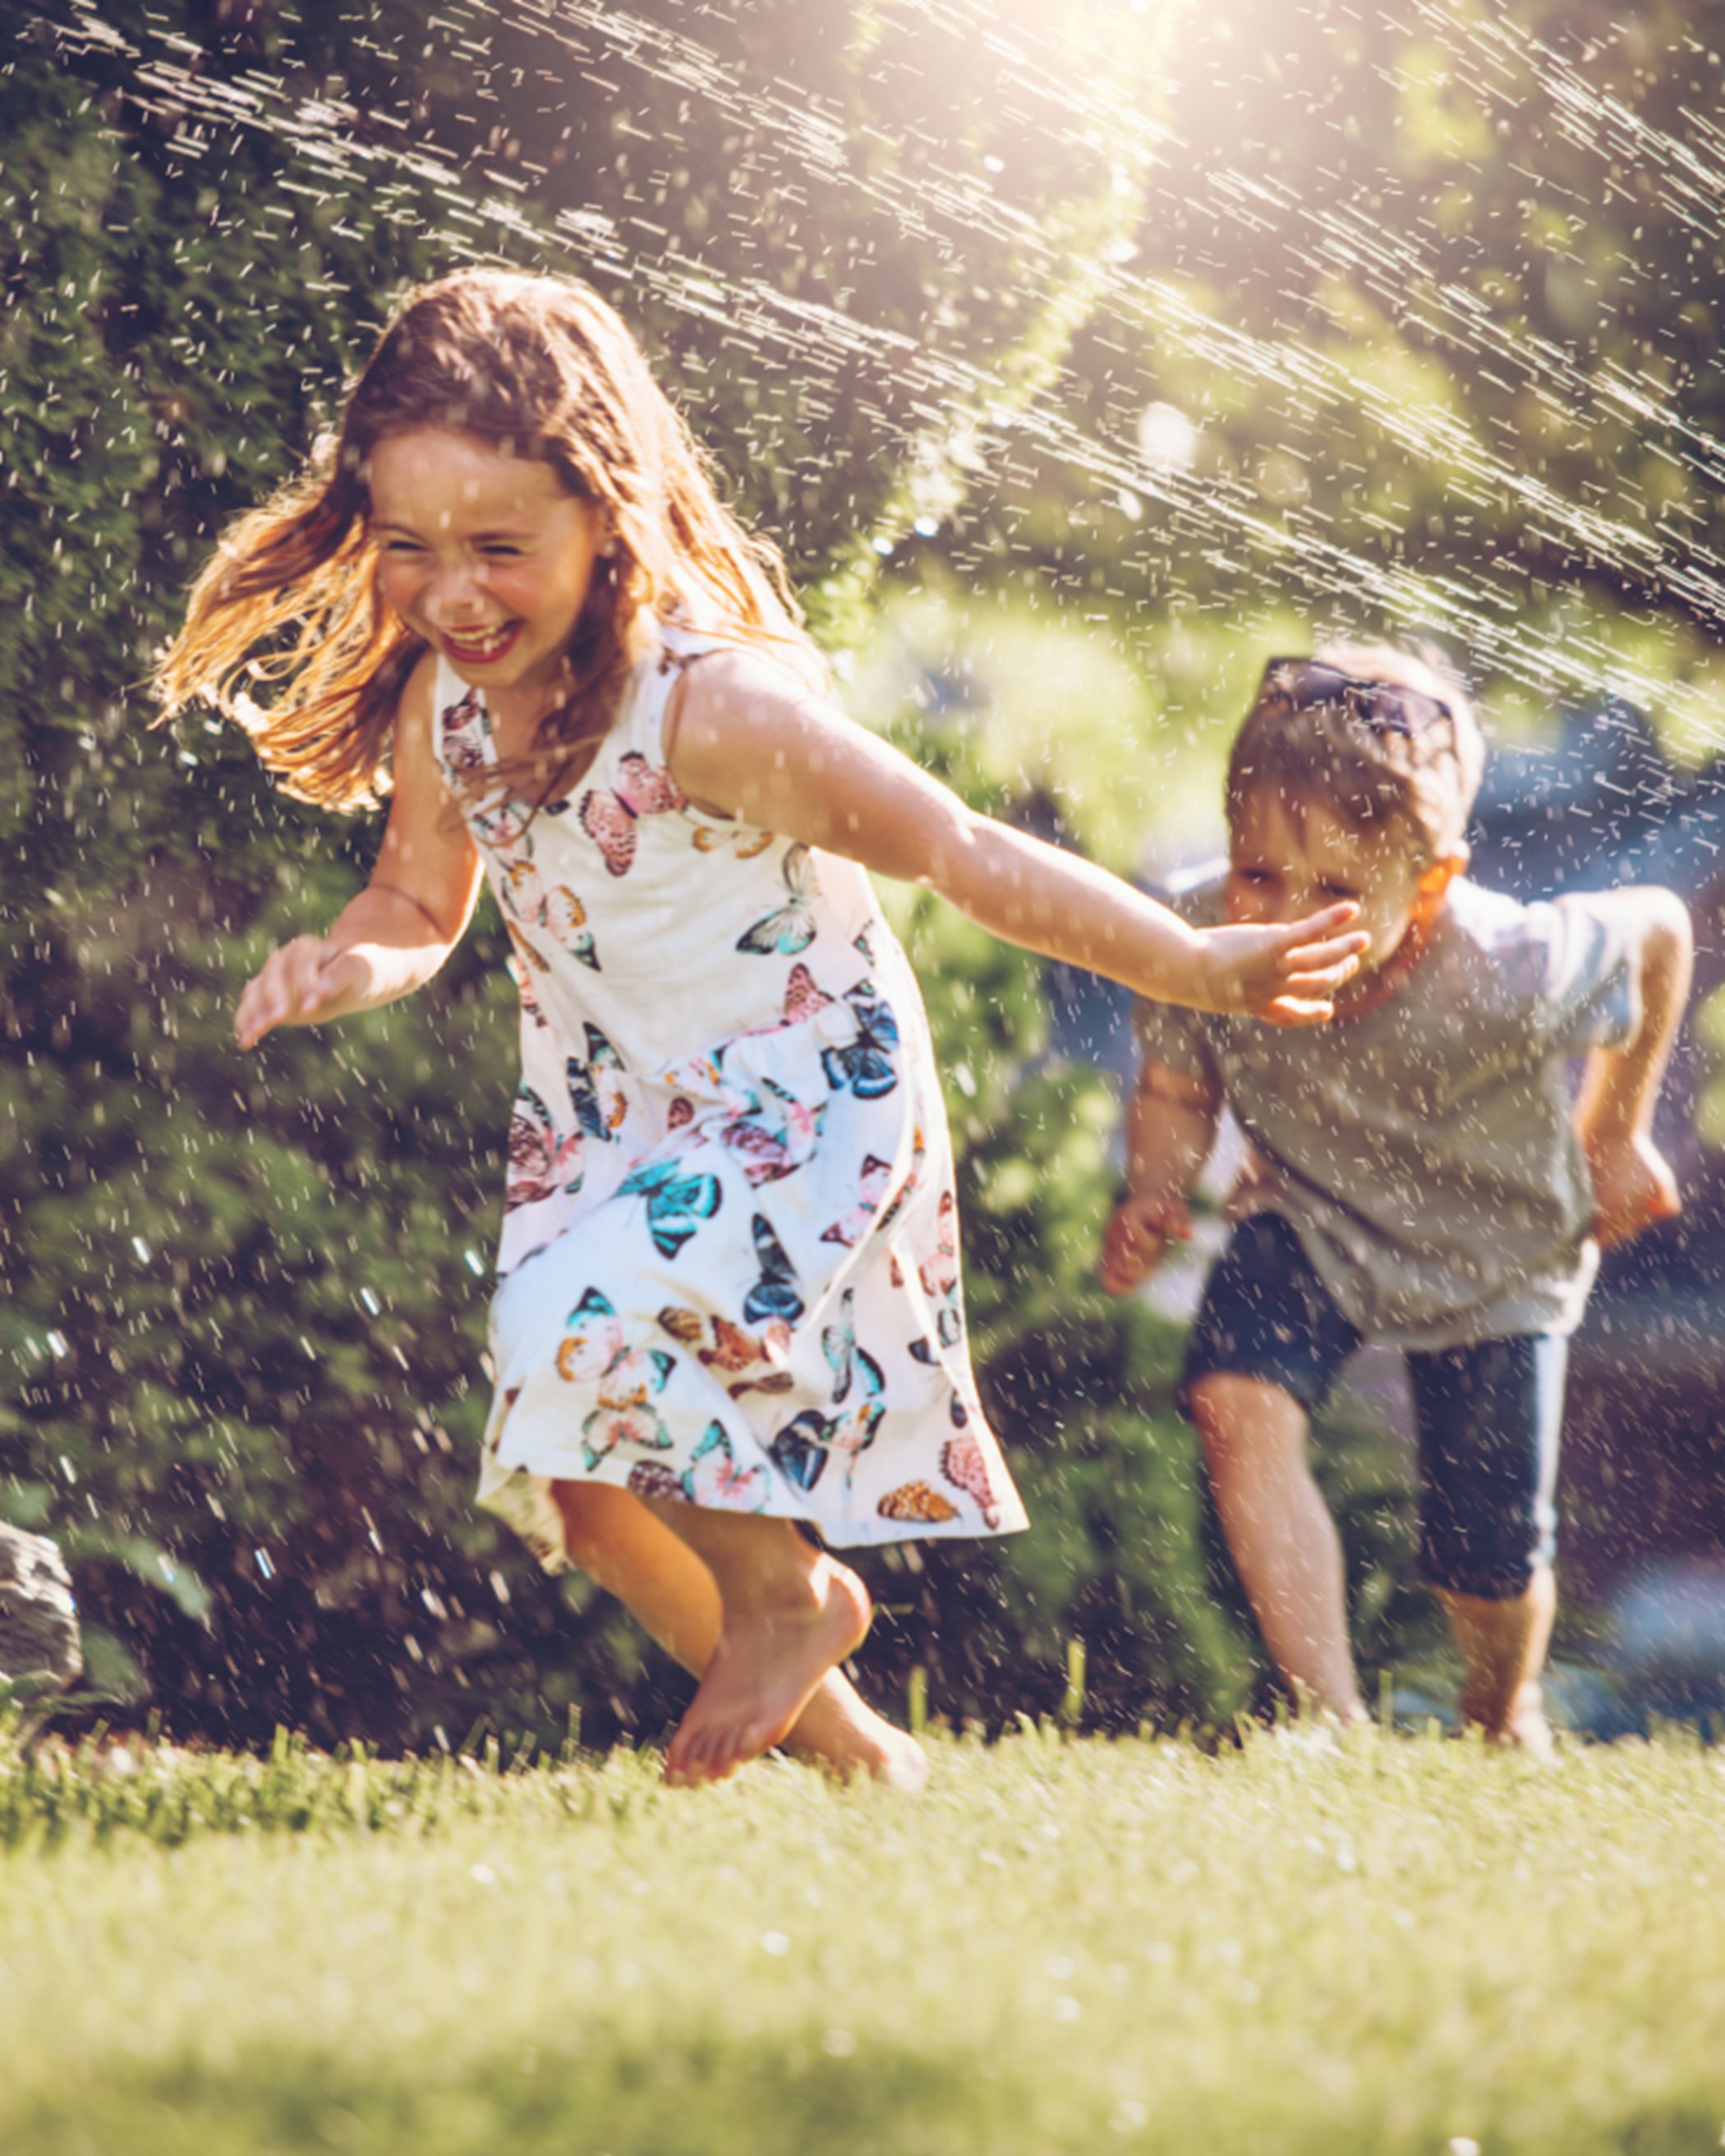 Kids playing in sprinkler